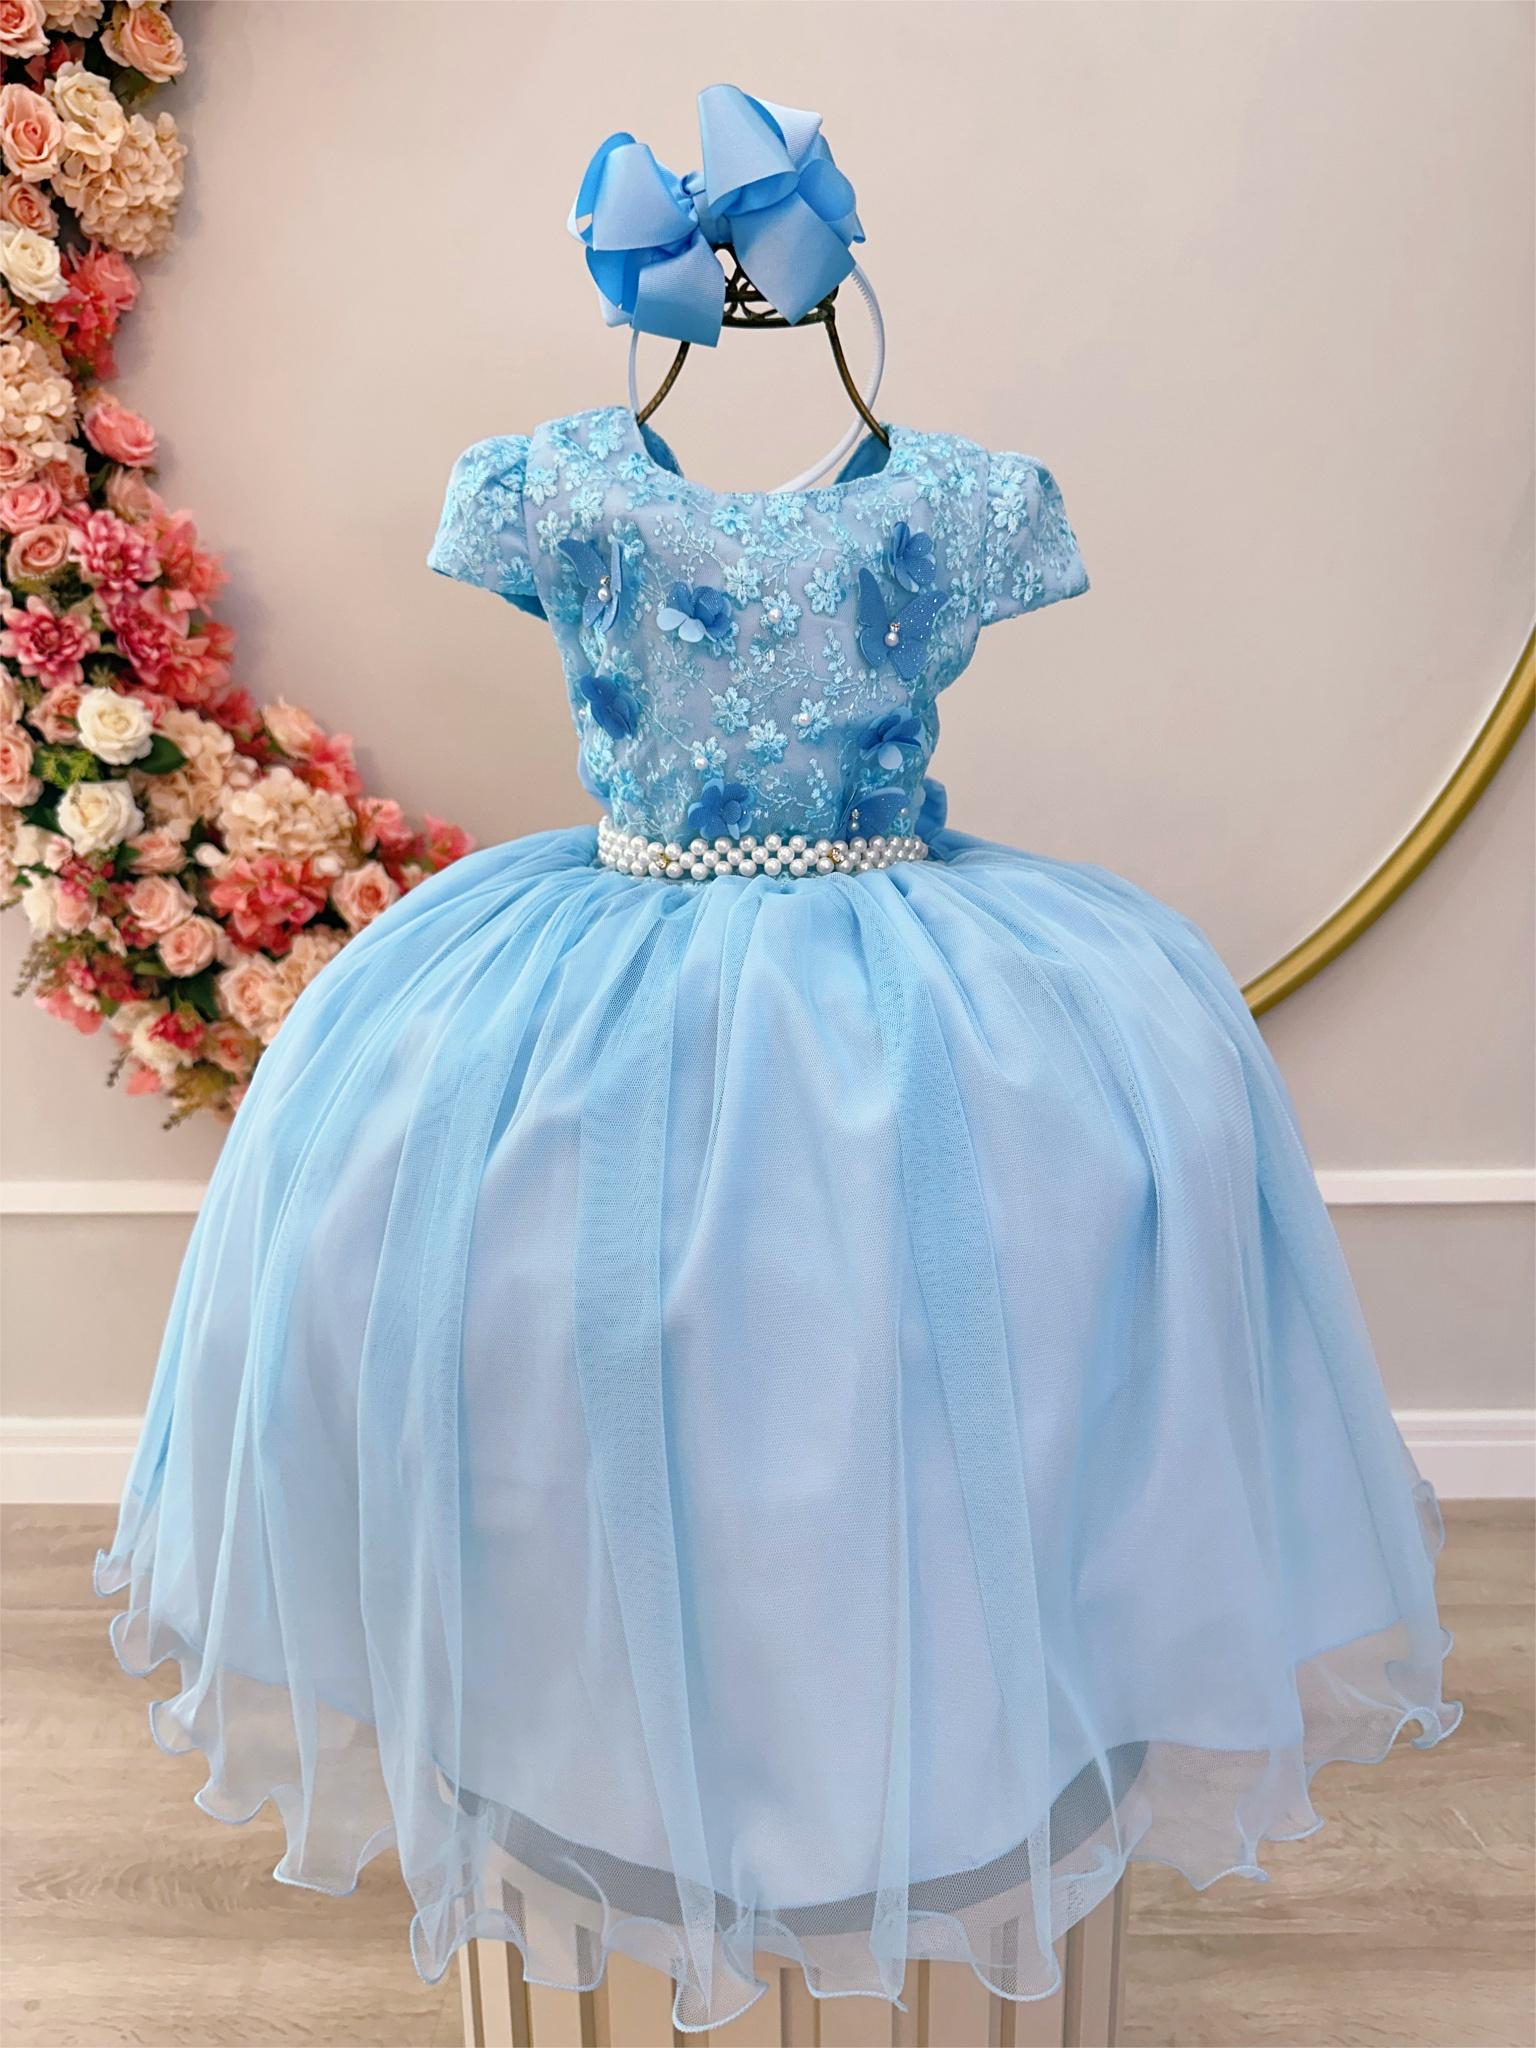 Vestido Infantil Azul Damas C/ Renda e Aplique Borboletas